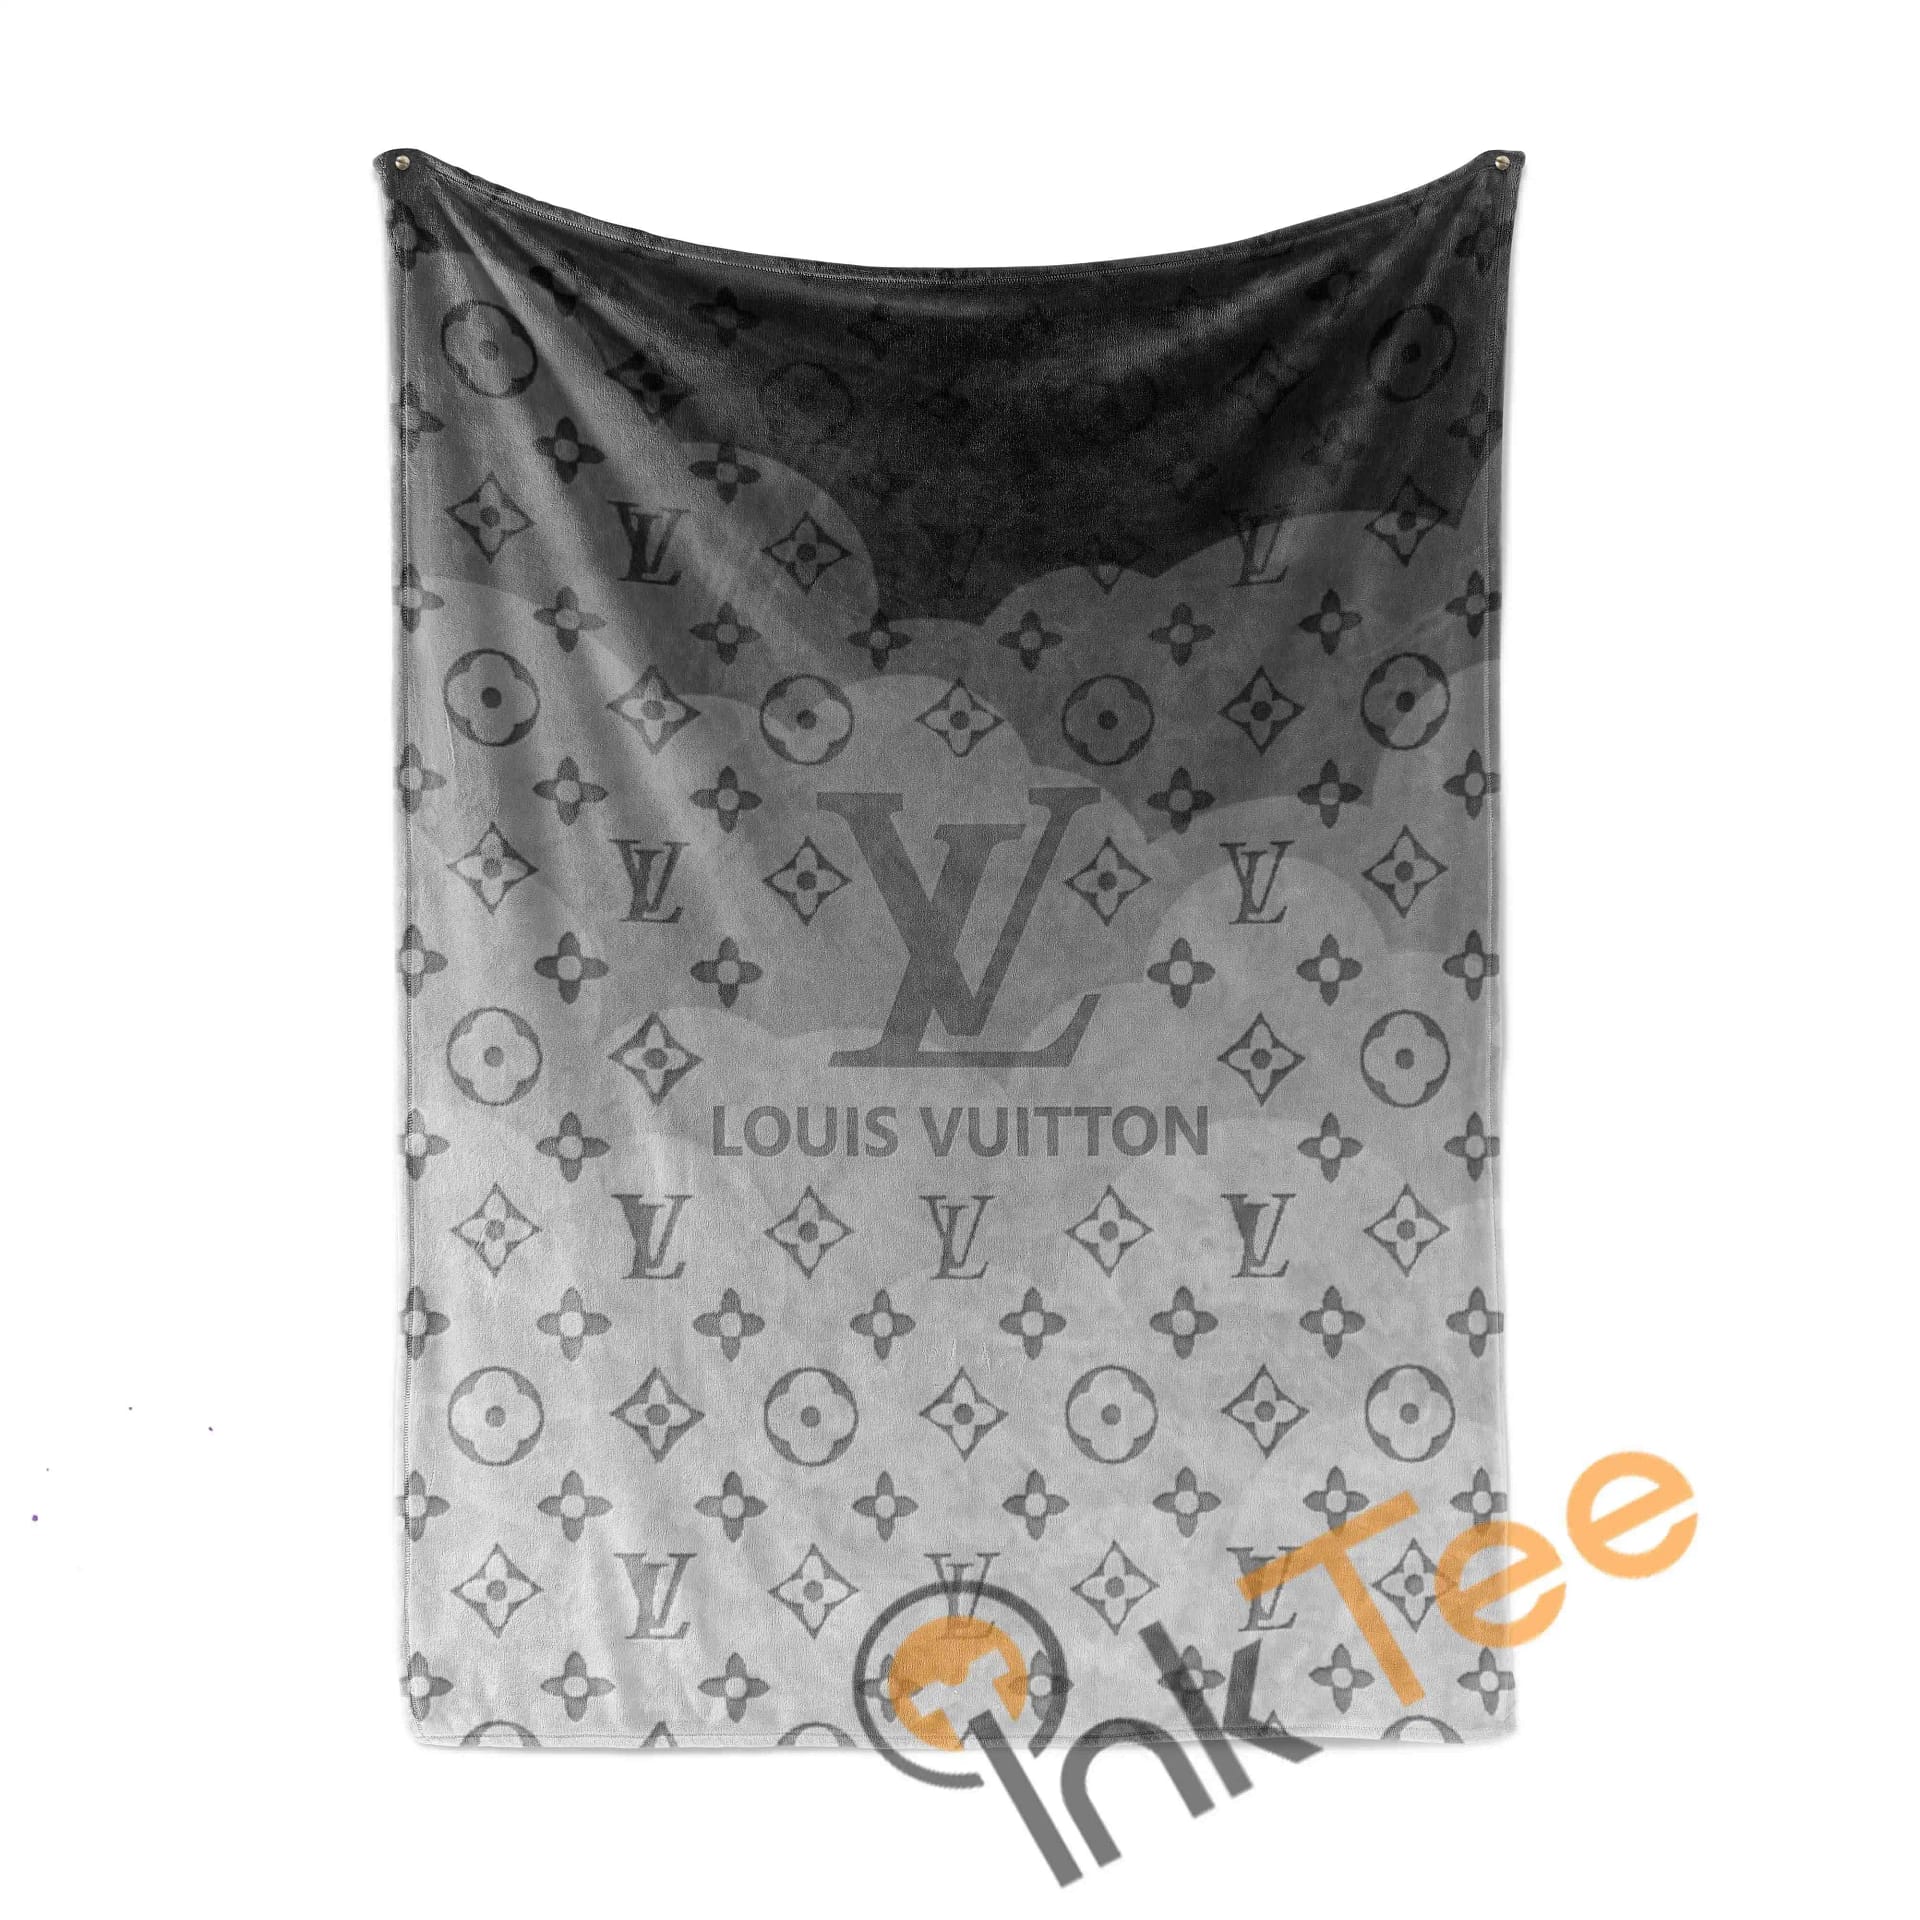 Louis Vuitton Limited Edition Amazon Best Seller Sku 4072 Fleece Blanket